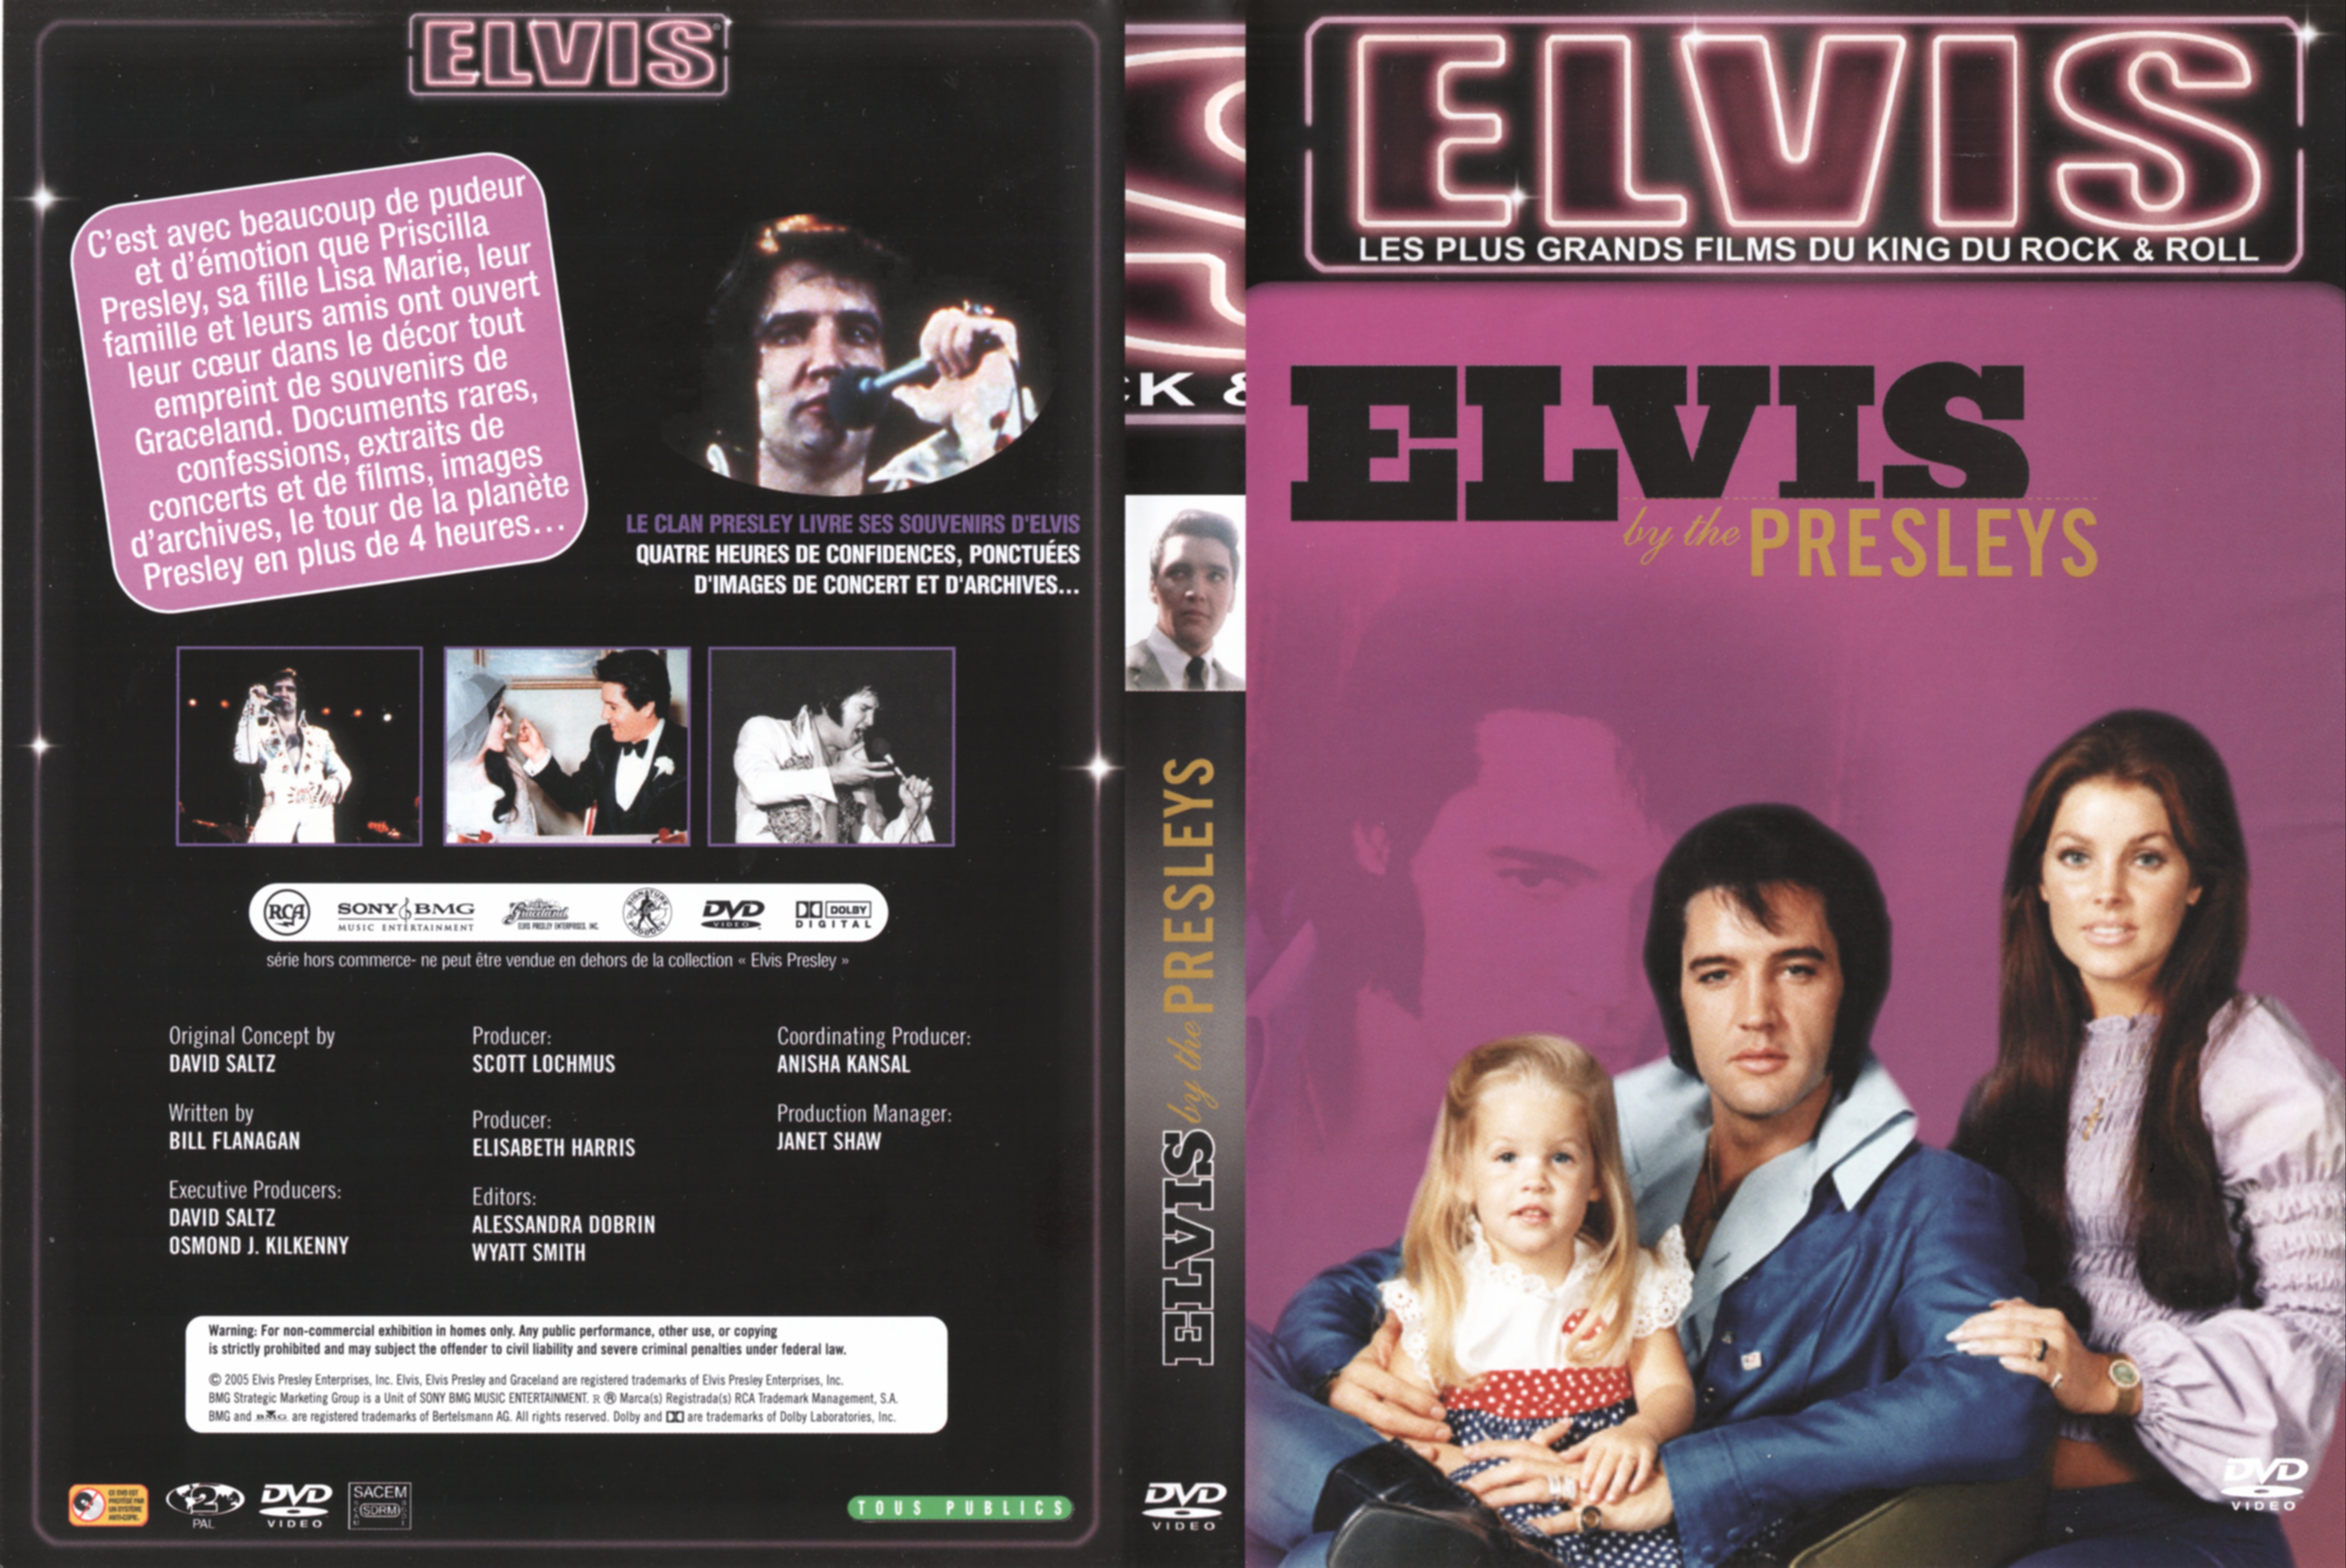 Jaquette DVD Elvis by the Presleys